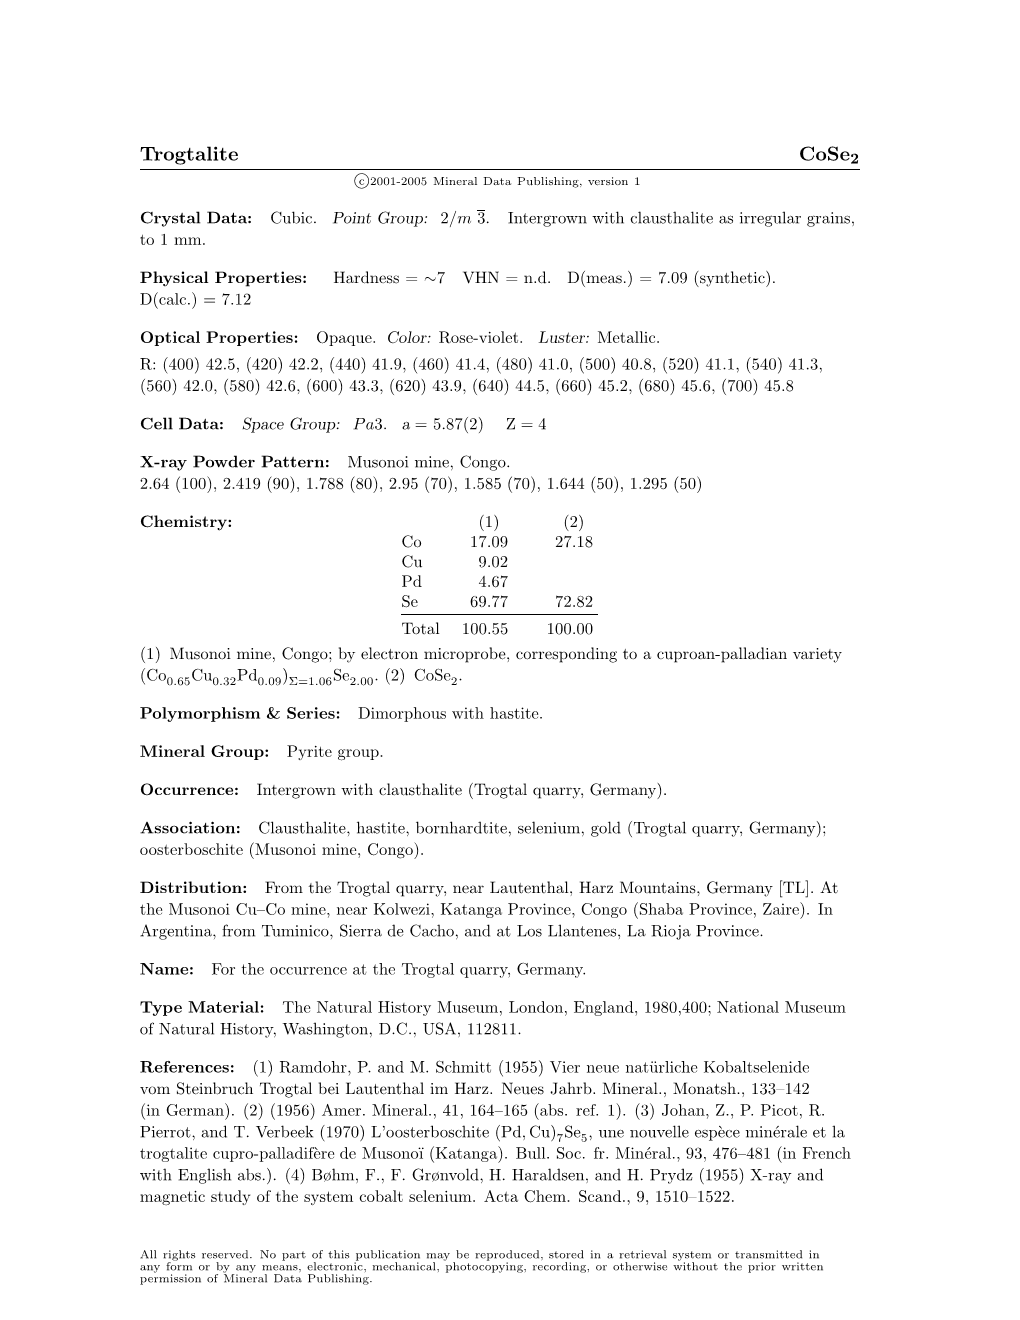 Trogtalite Cose2 C 2001-2005 Mineral Data Publishing, Version 1